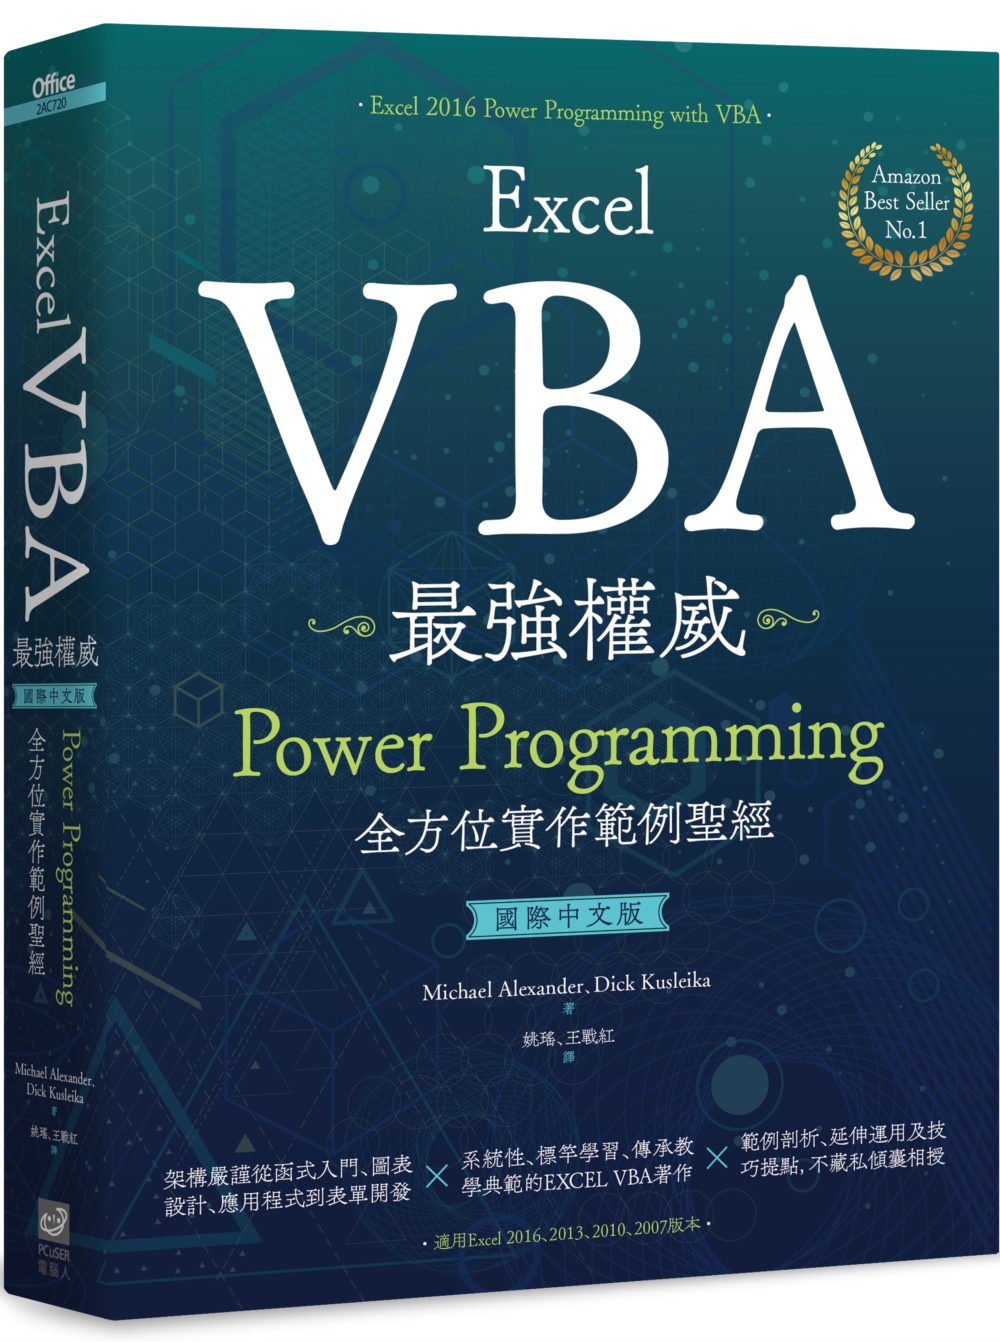 Excel VBA最強權威〈國際中文版〉：Power Programming全方位實作範例聖經